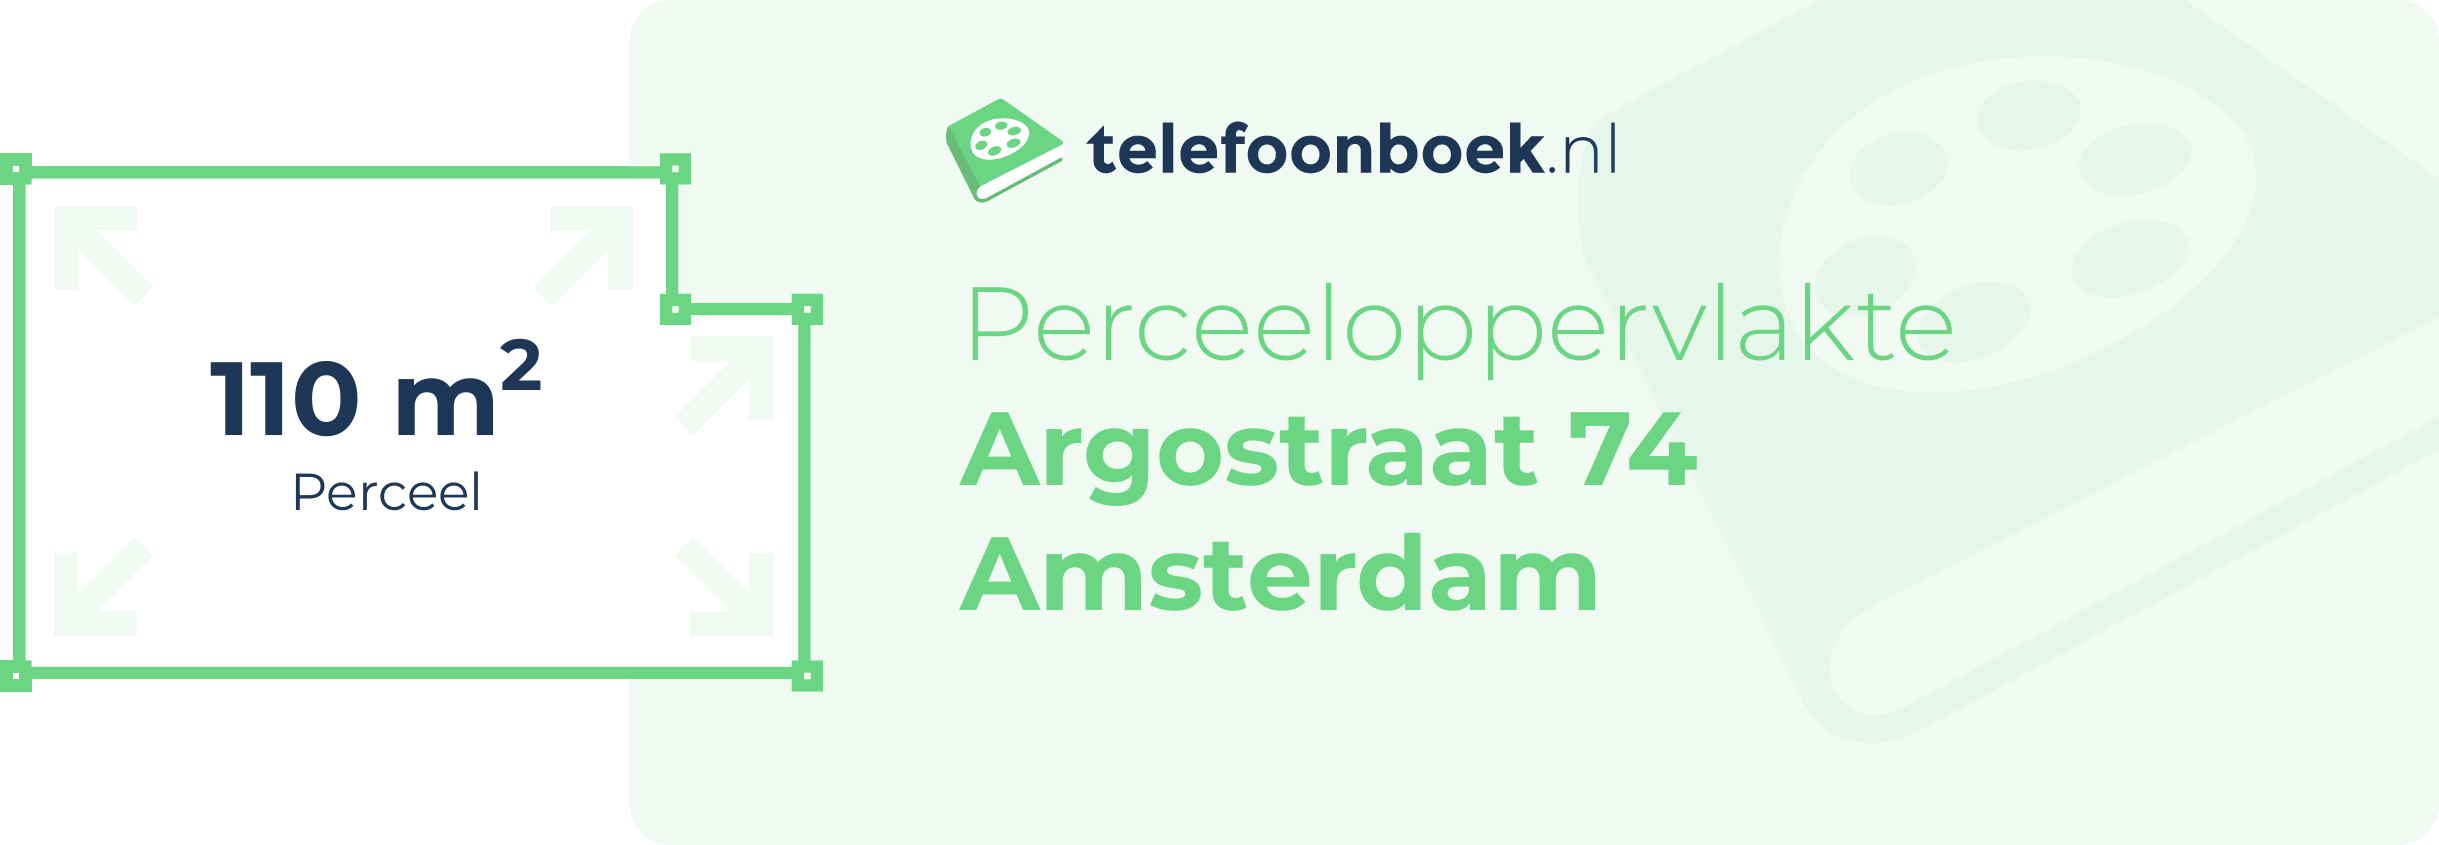 Perceeloppervlakte Argostraat 74 Amsterdam